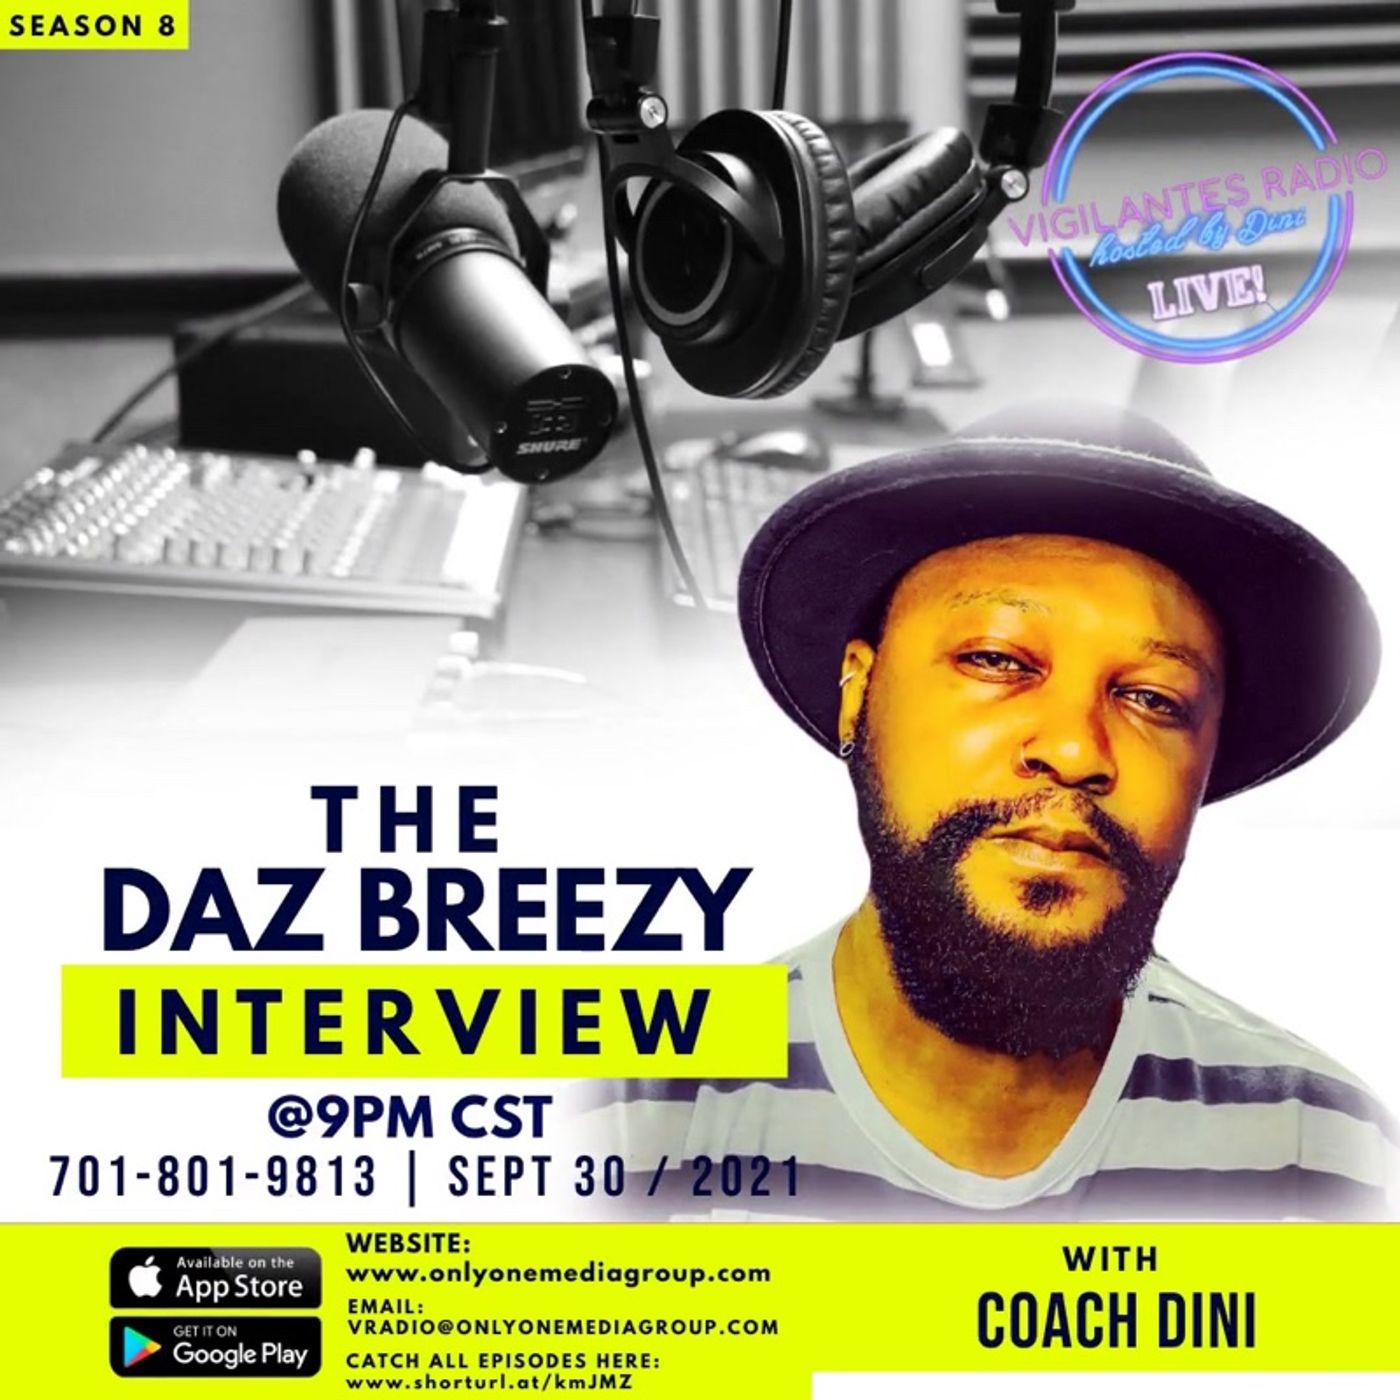 The Daz Breezy Interview. Image